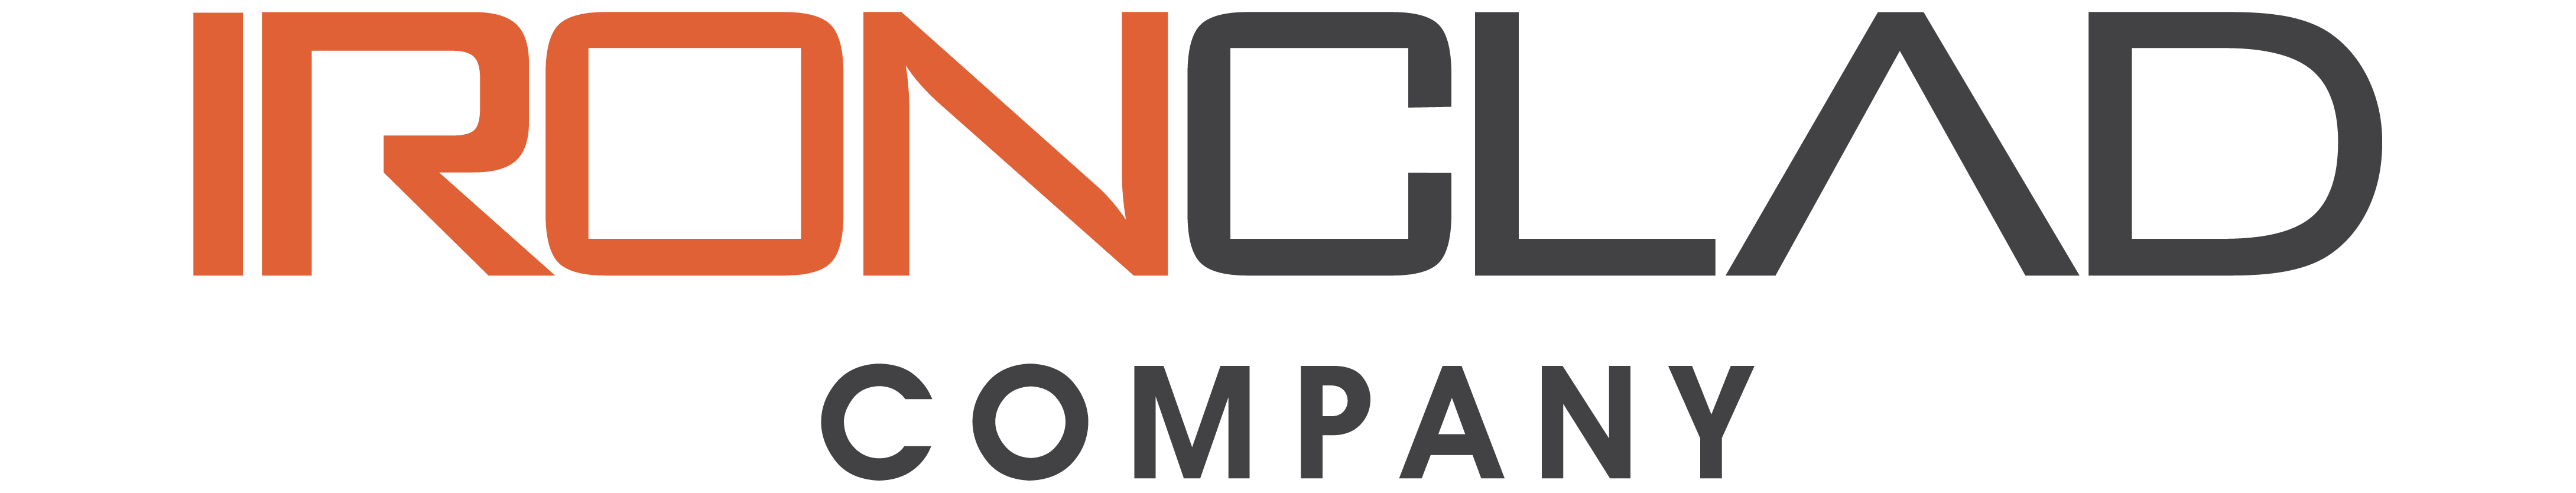 IronClad Company